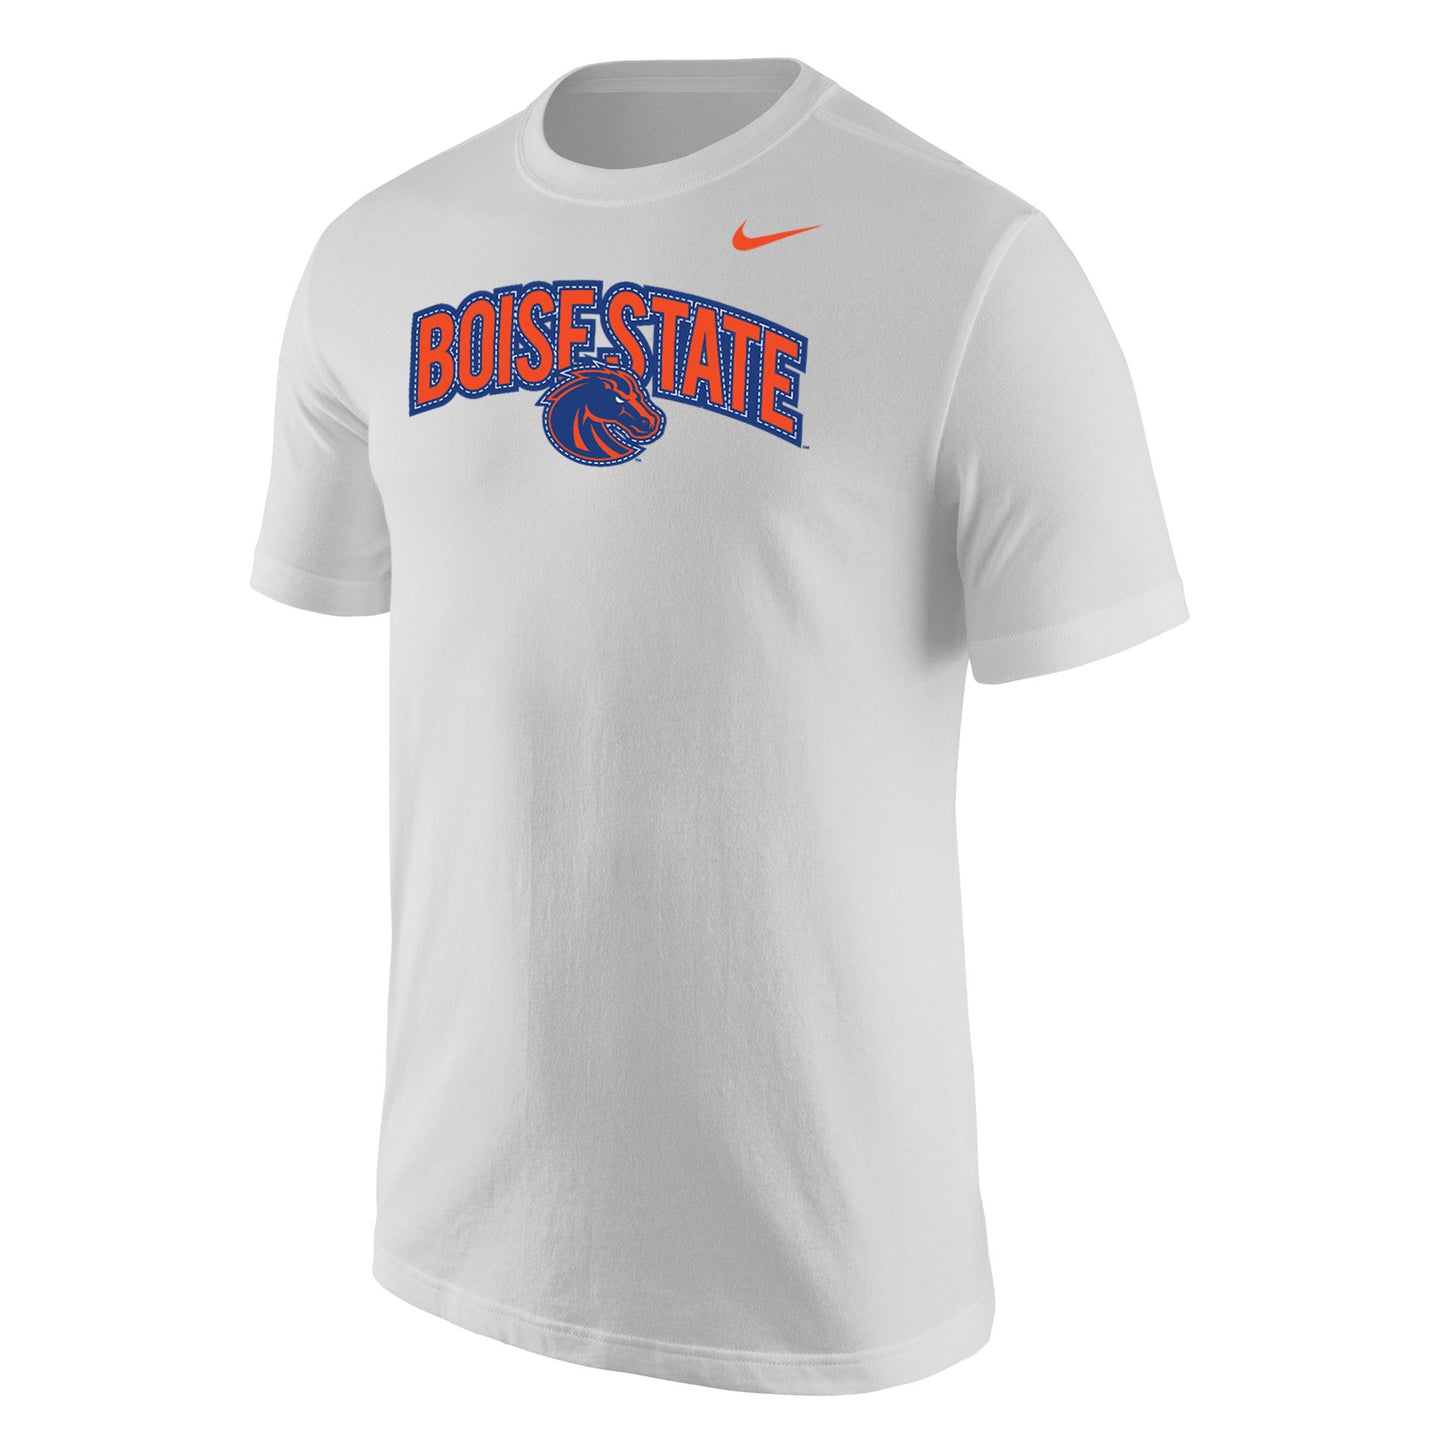 Boise State Broncos Nike Men's Stitched T-Shirt (White)